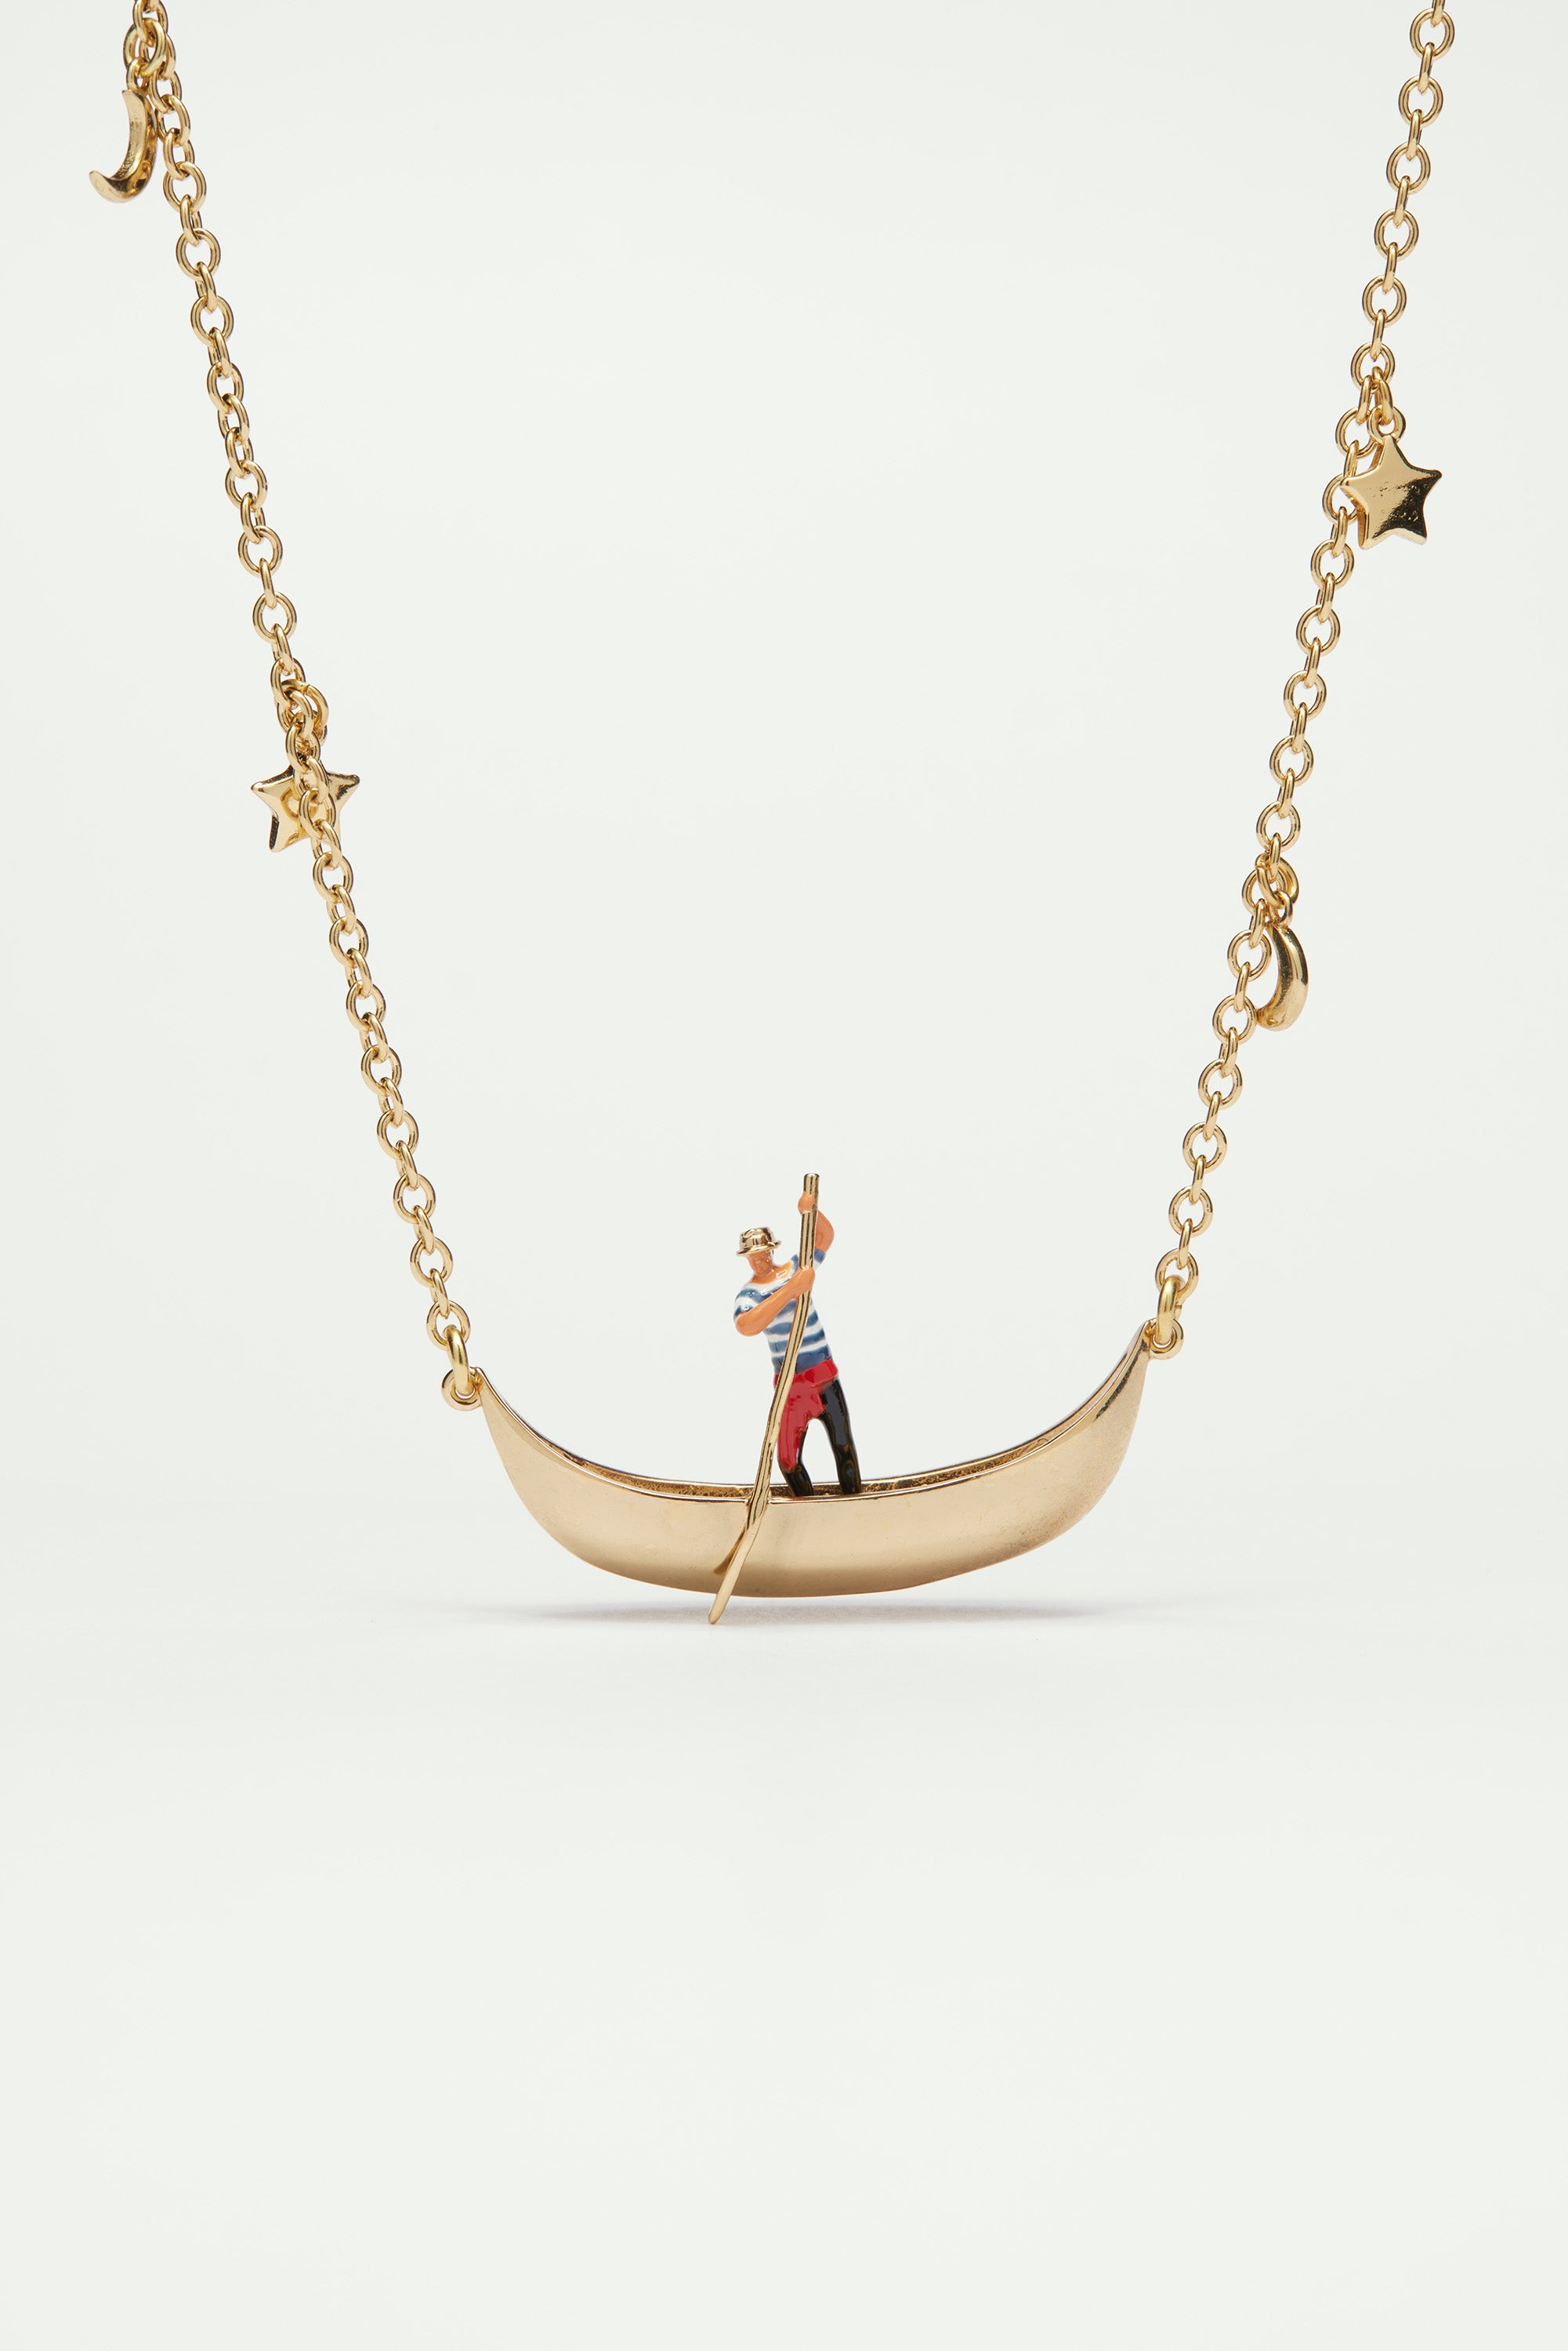 Boatman and gondola pendant necklace